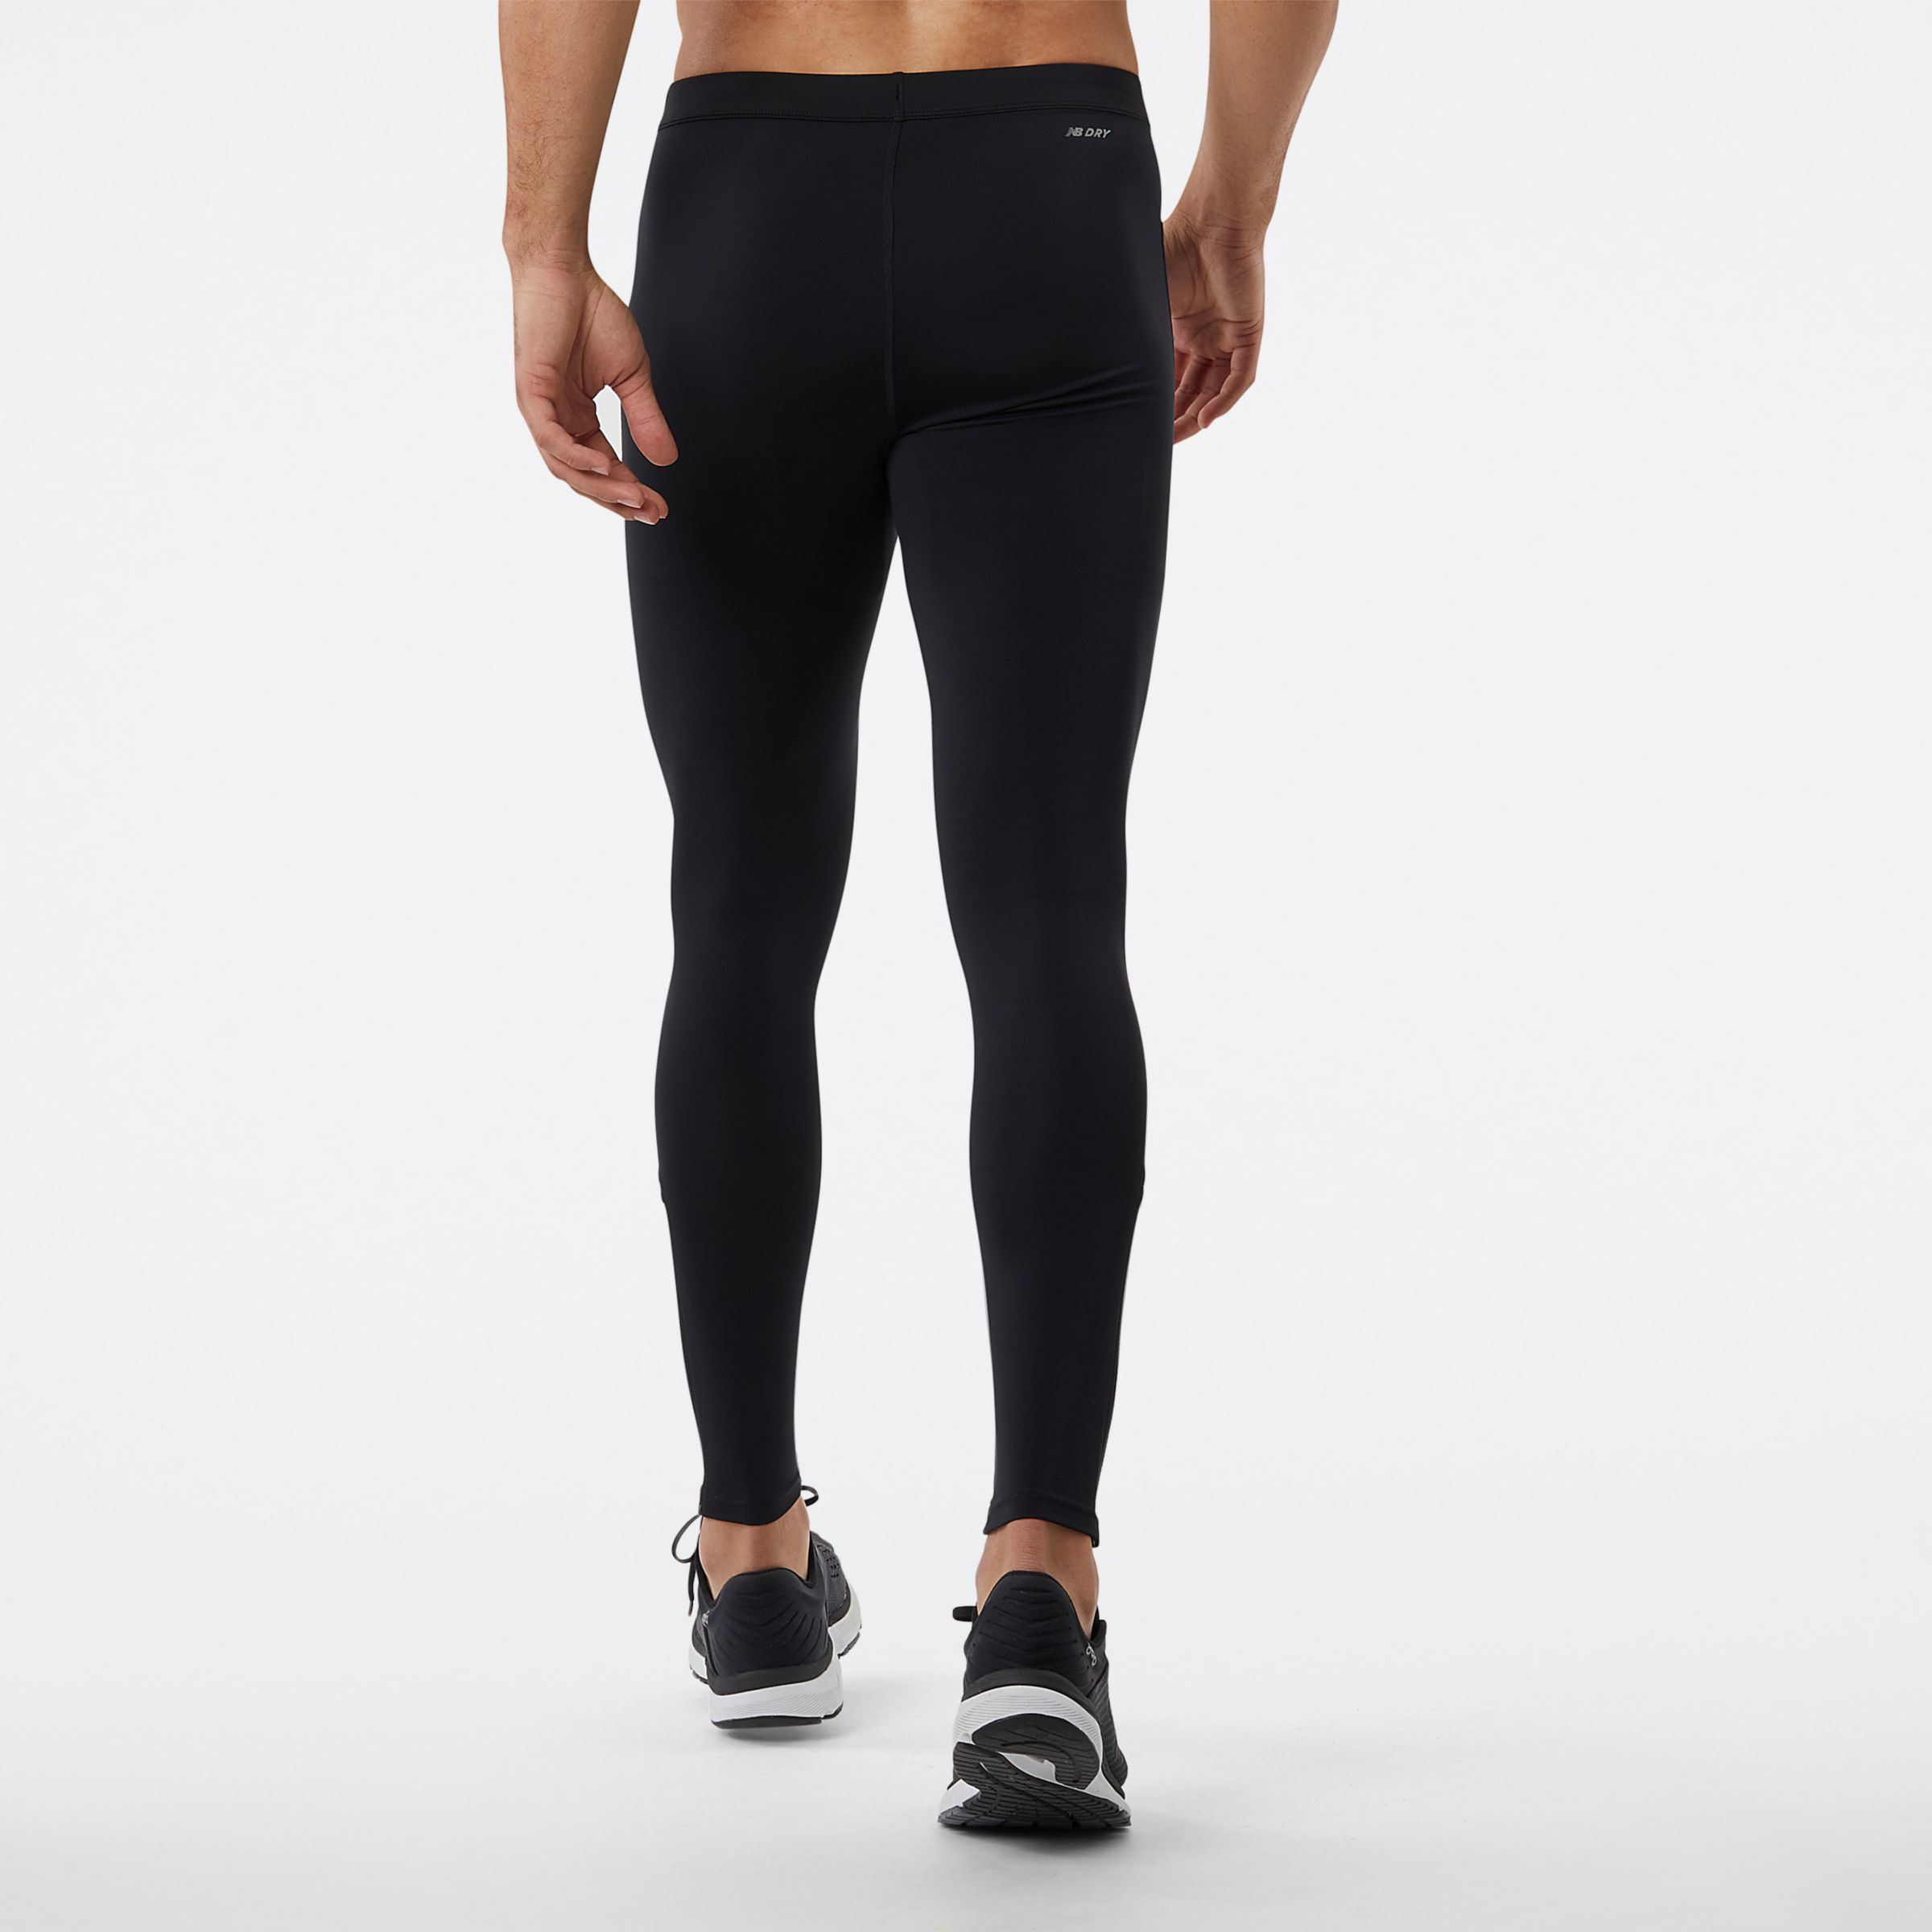 New Balance Accelerate Tight Men's Pants Sport | eBay